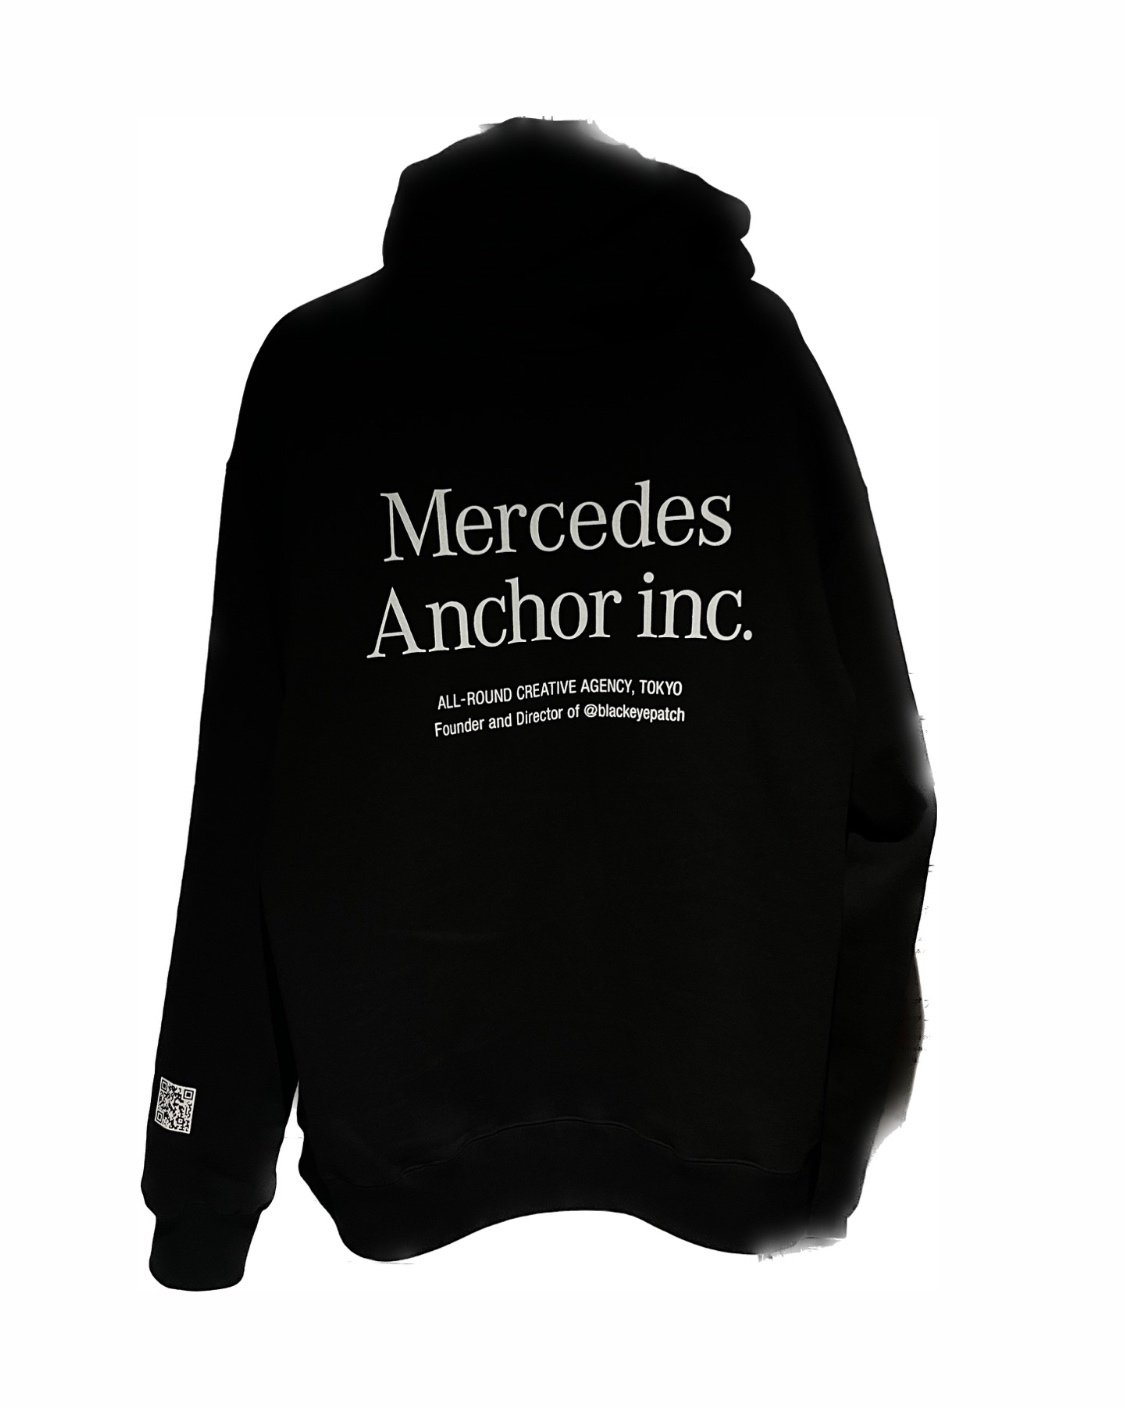 Mercedes Anchor Inc. Gadget Case